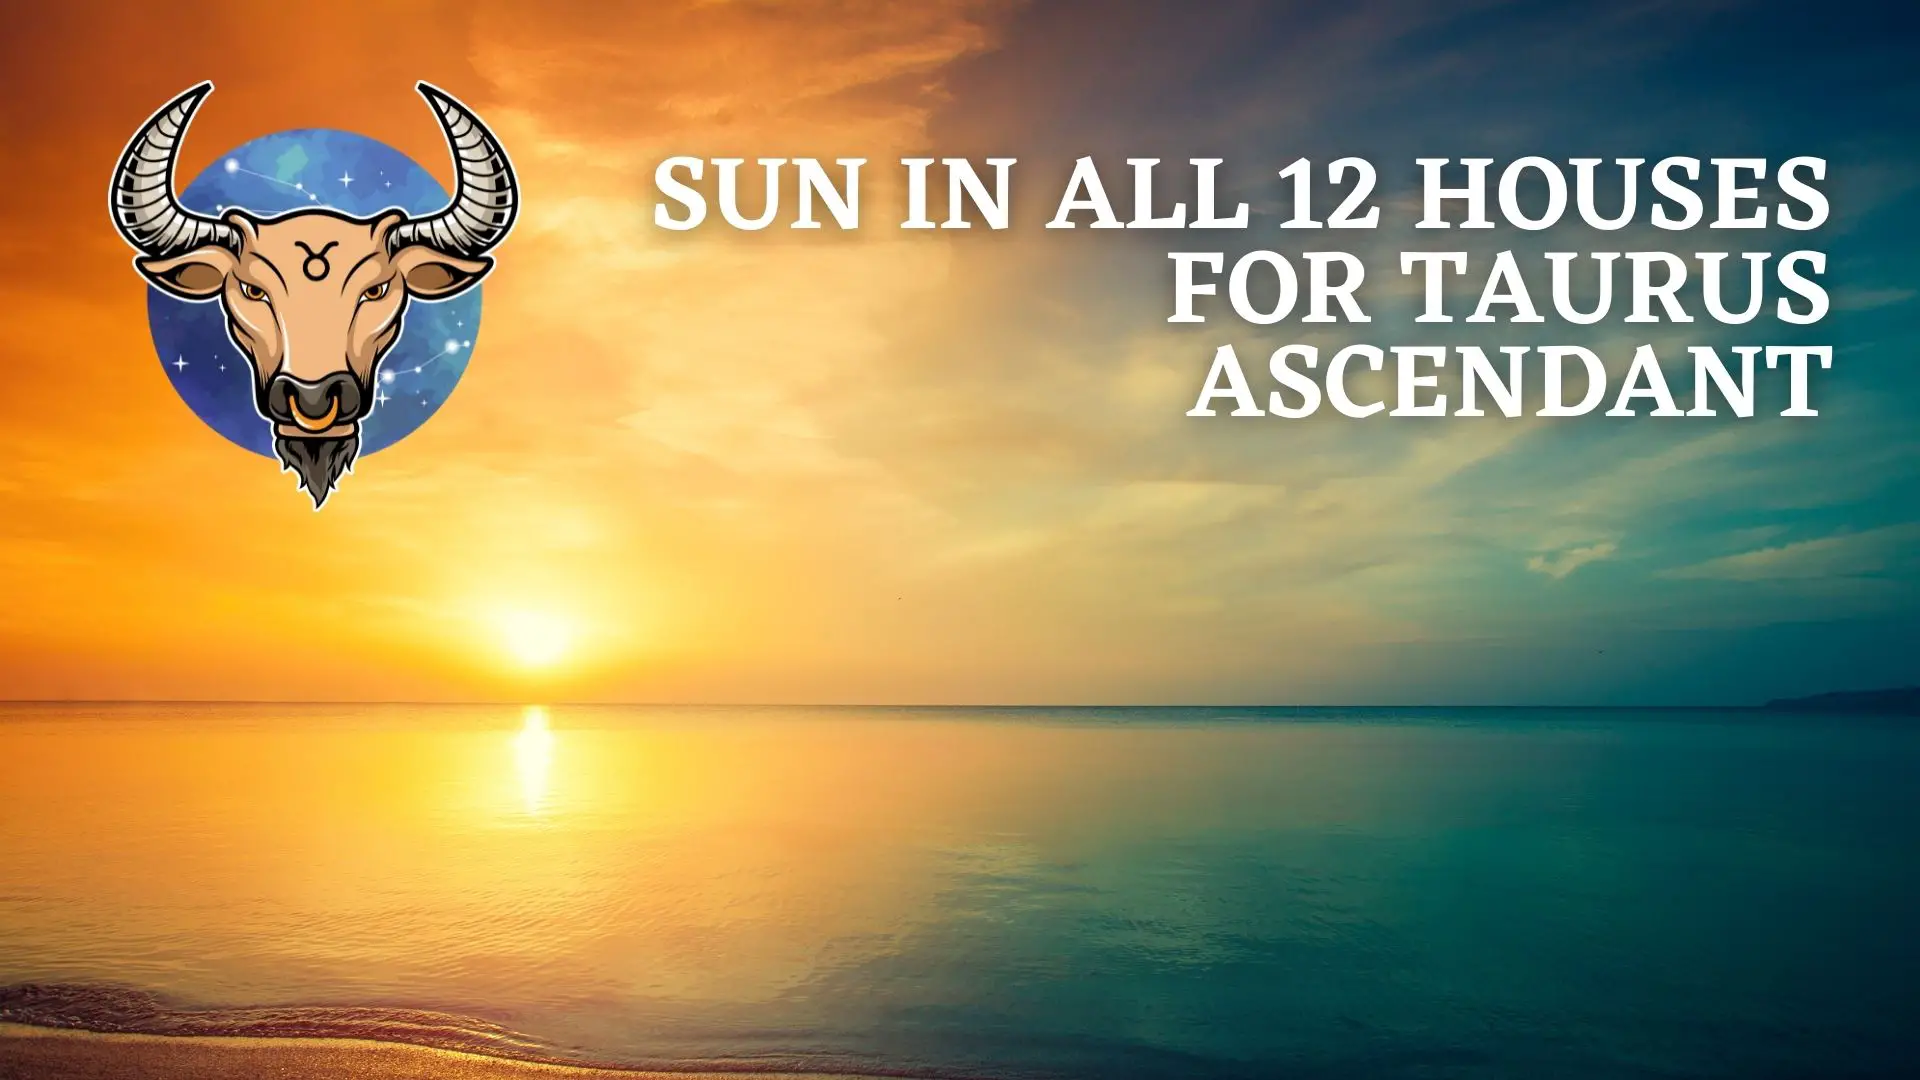 Sun In All 12 Houses for Taurus Ascendant